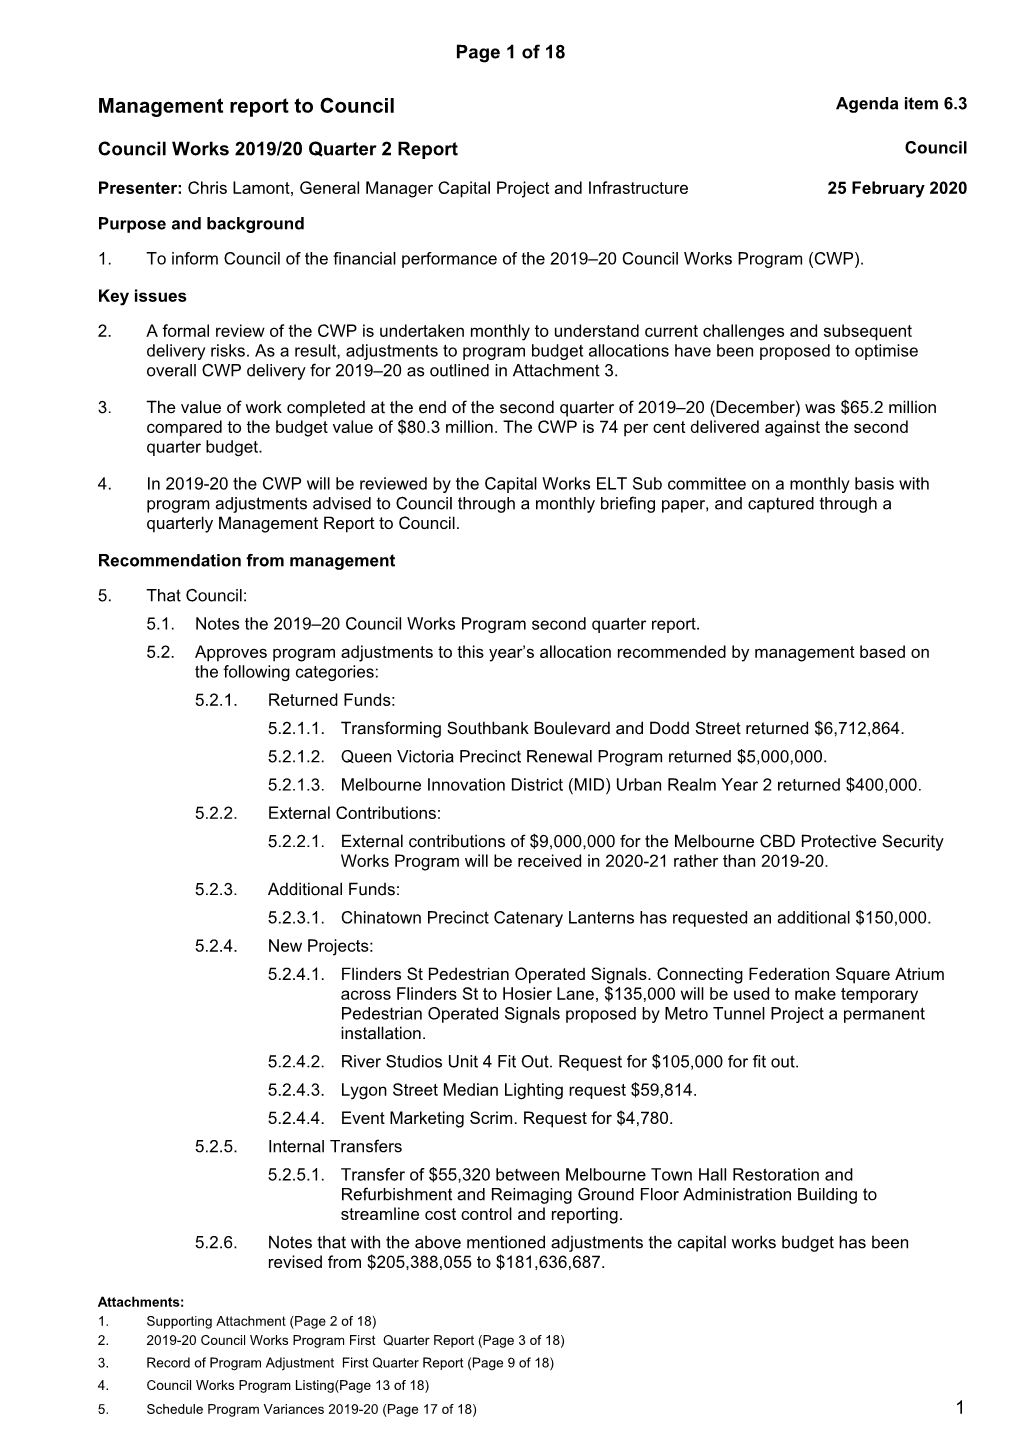 Management Report to Council Agenda Item 6.3